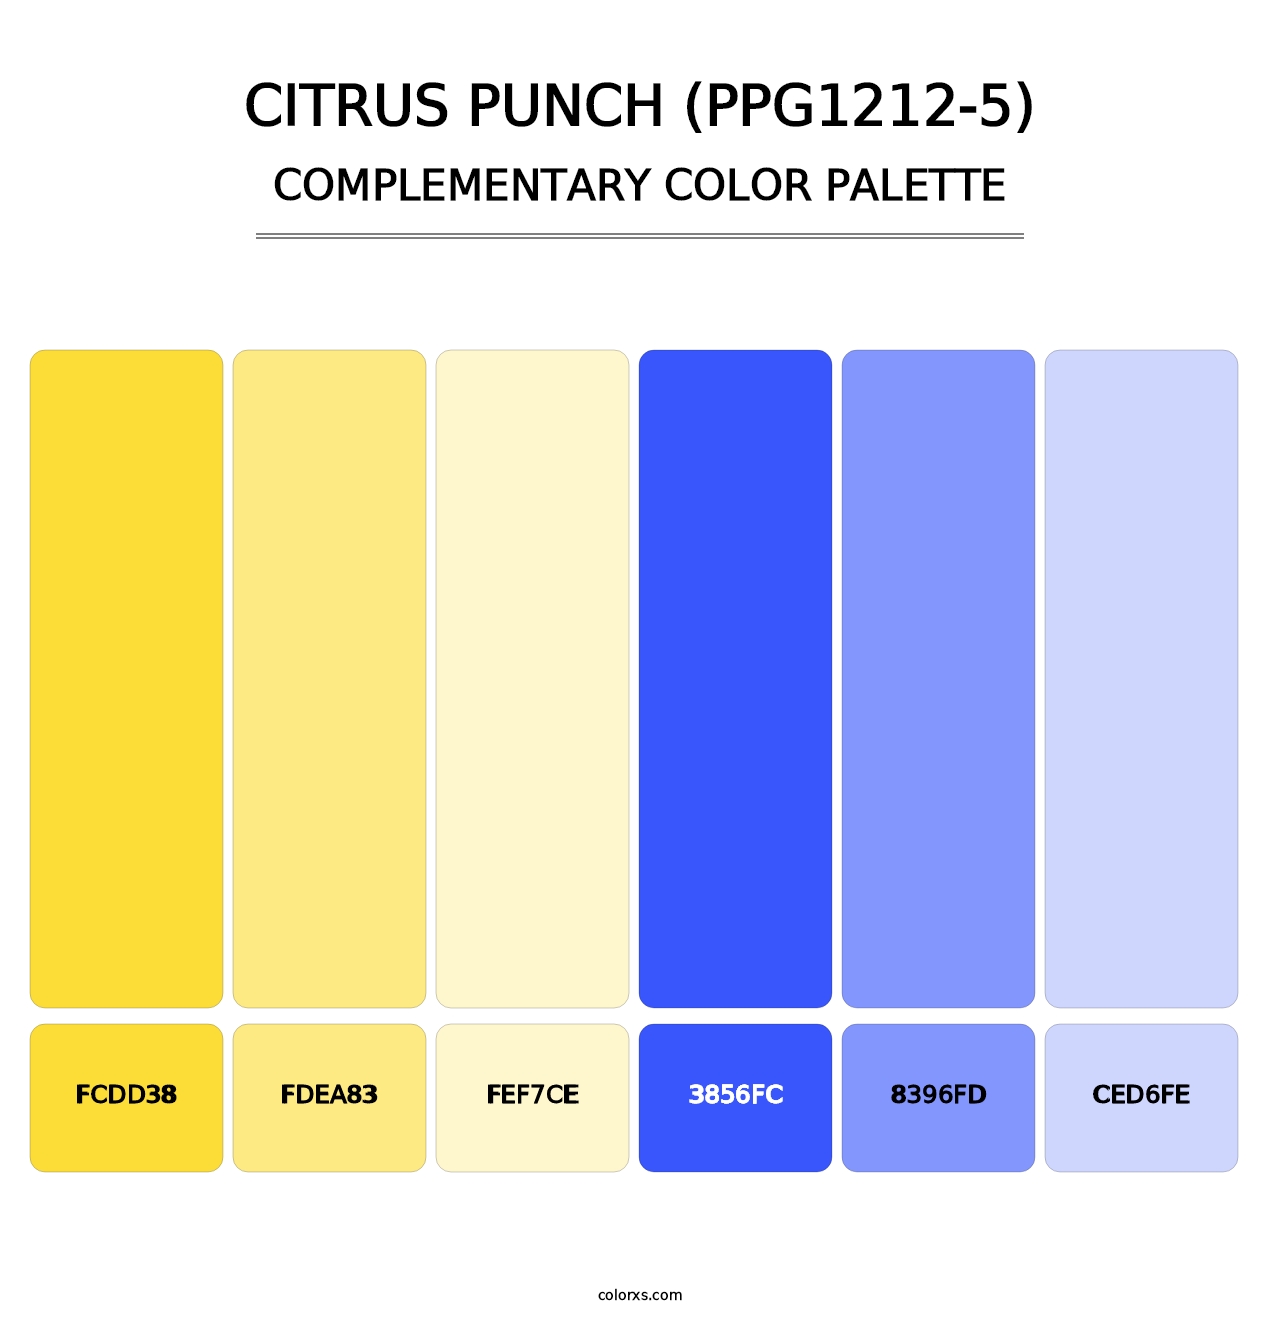 Citrus Punch (PPG1212-5) - Complementary Color Palette